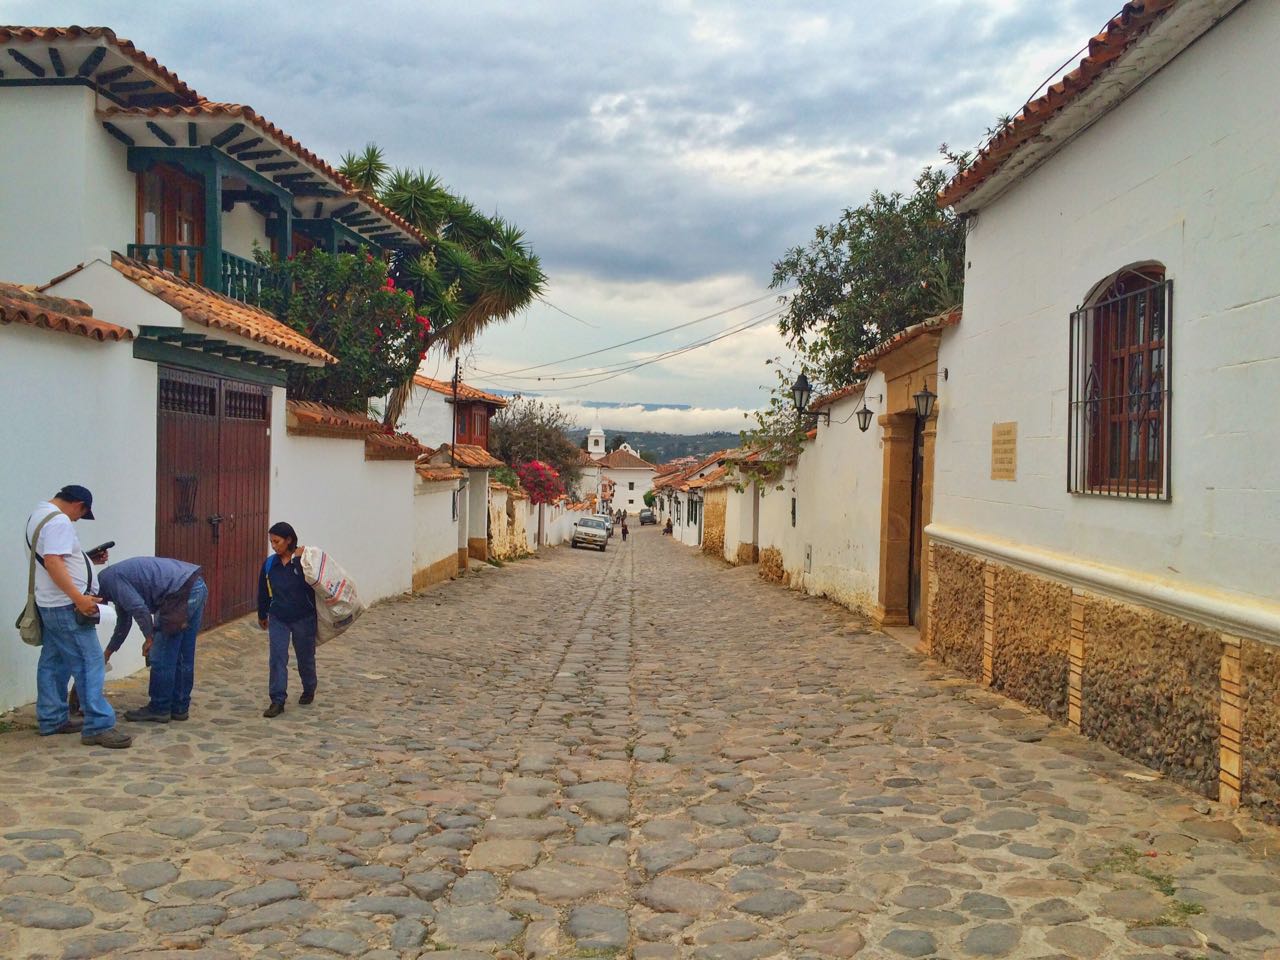 the cobled streets of Villa de leyva